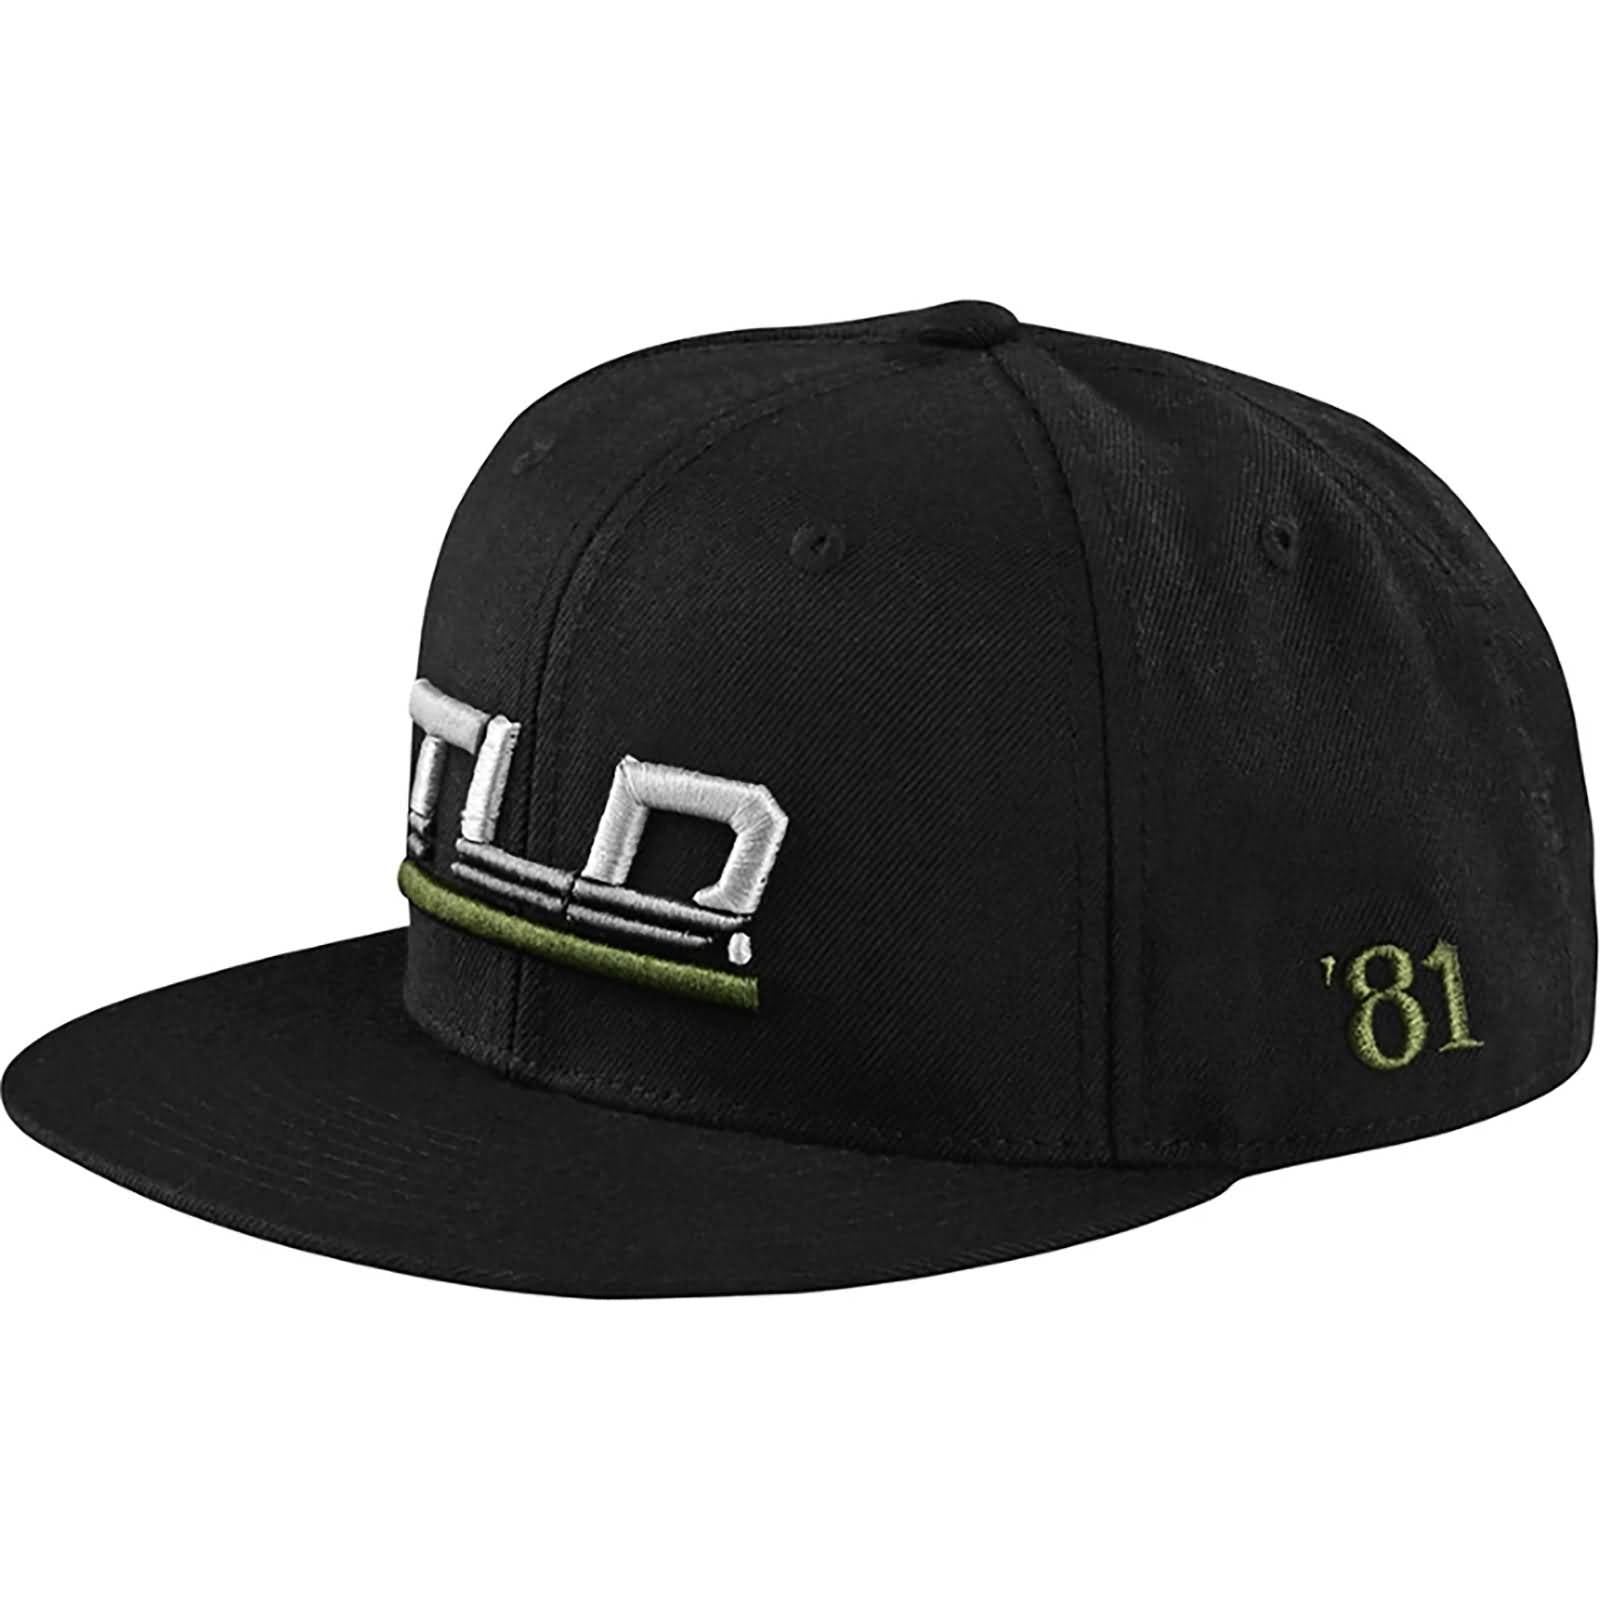 Troy Lee Designs Flat Bill Speed Men's Snapback Adjustable Hats-788775000